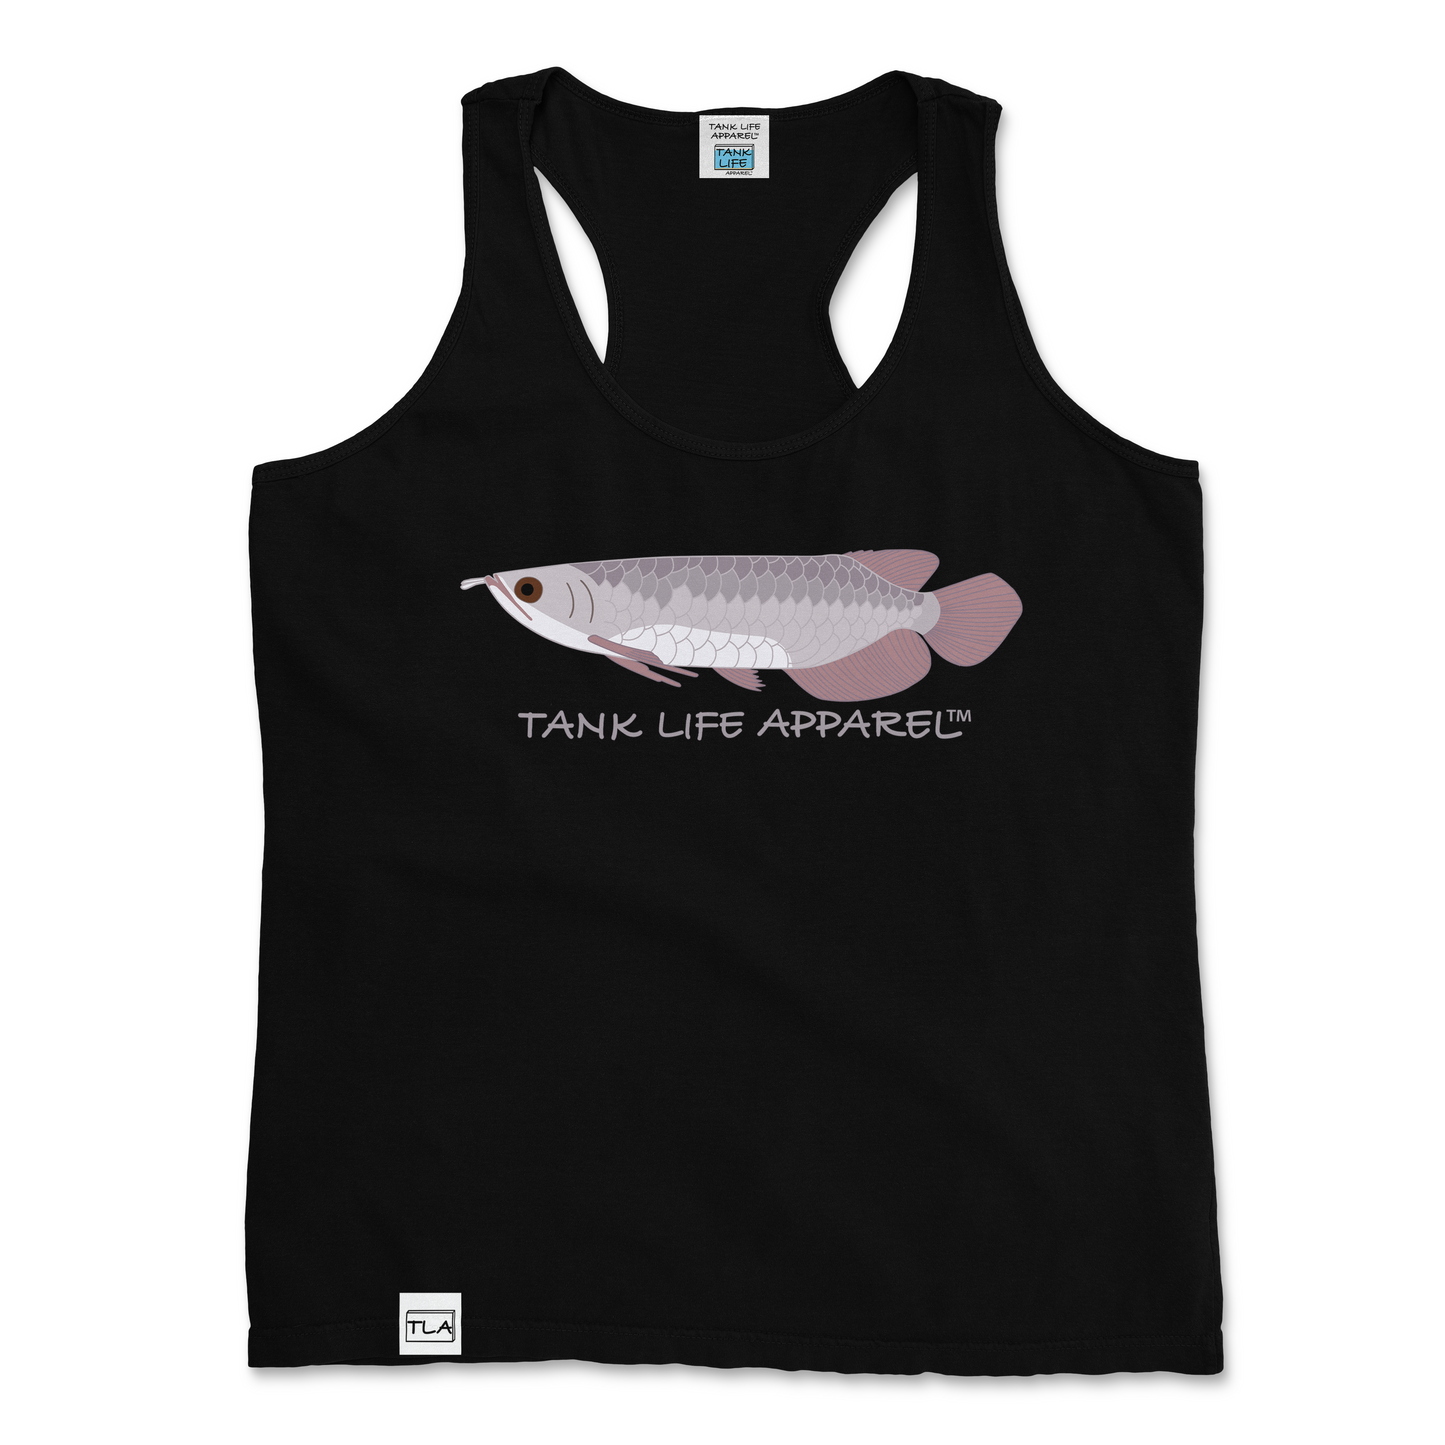 The Tank Life Apparel silver arowana design on a stylish women's tank top with our custom TLA hem label. Gray monster amazon fish.